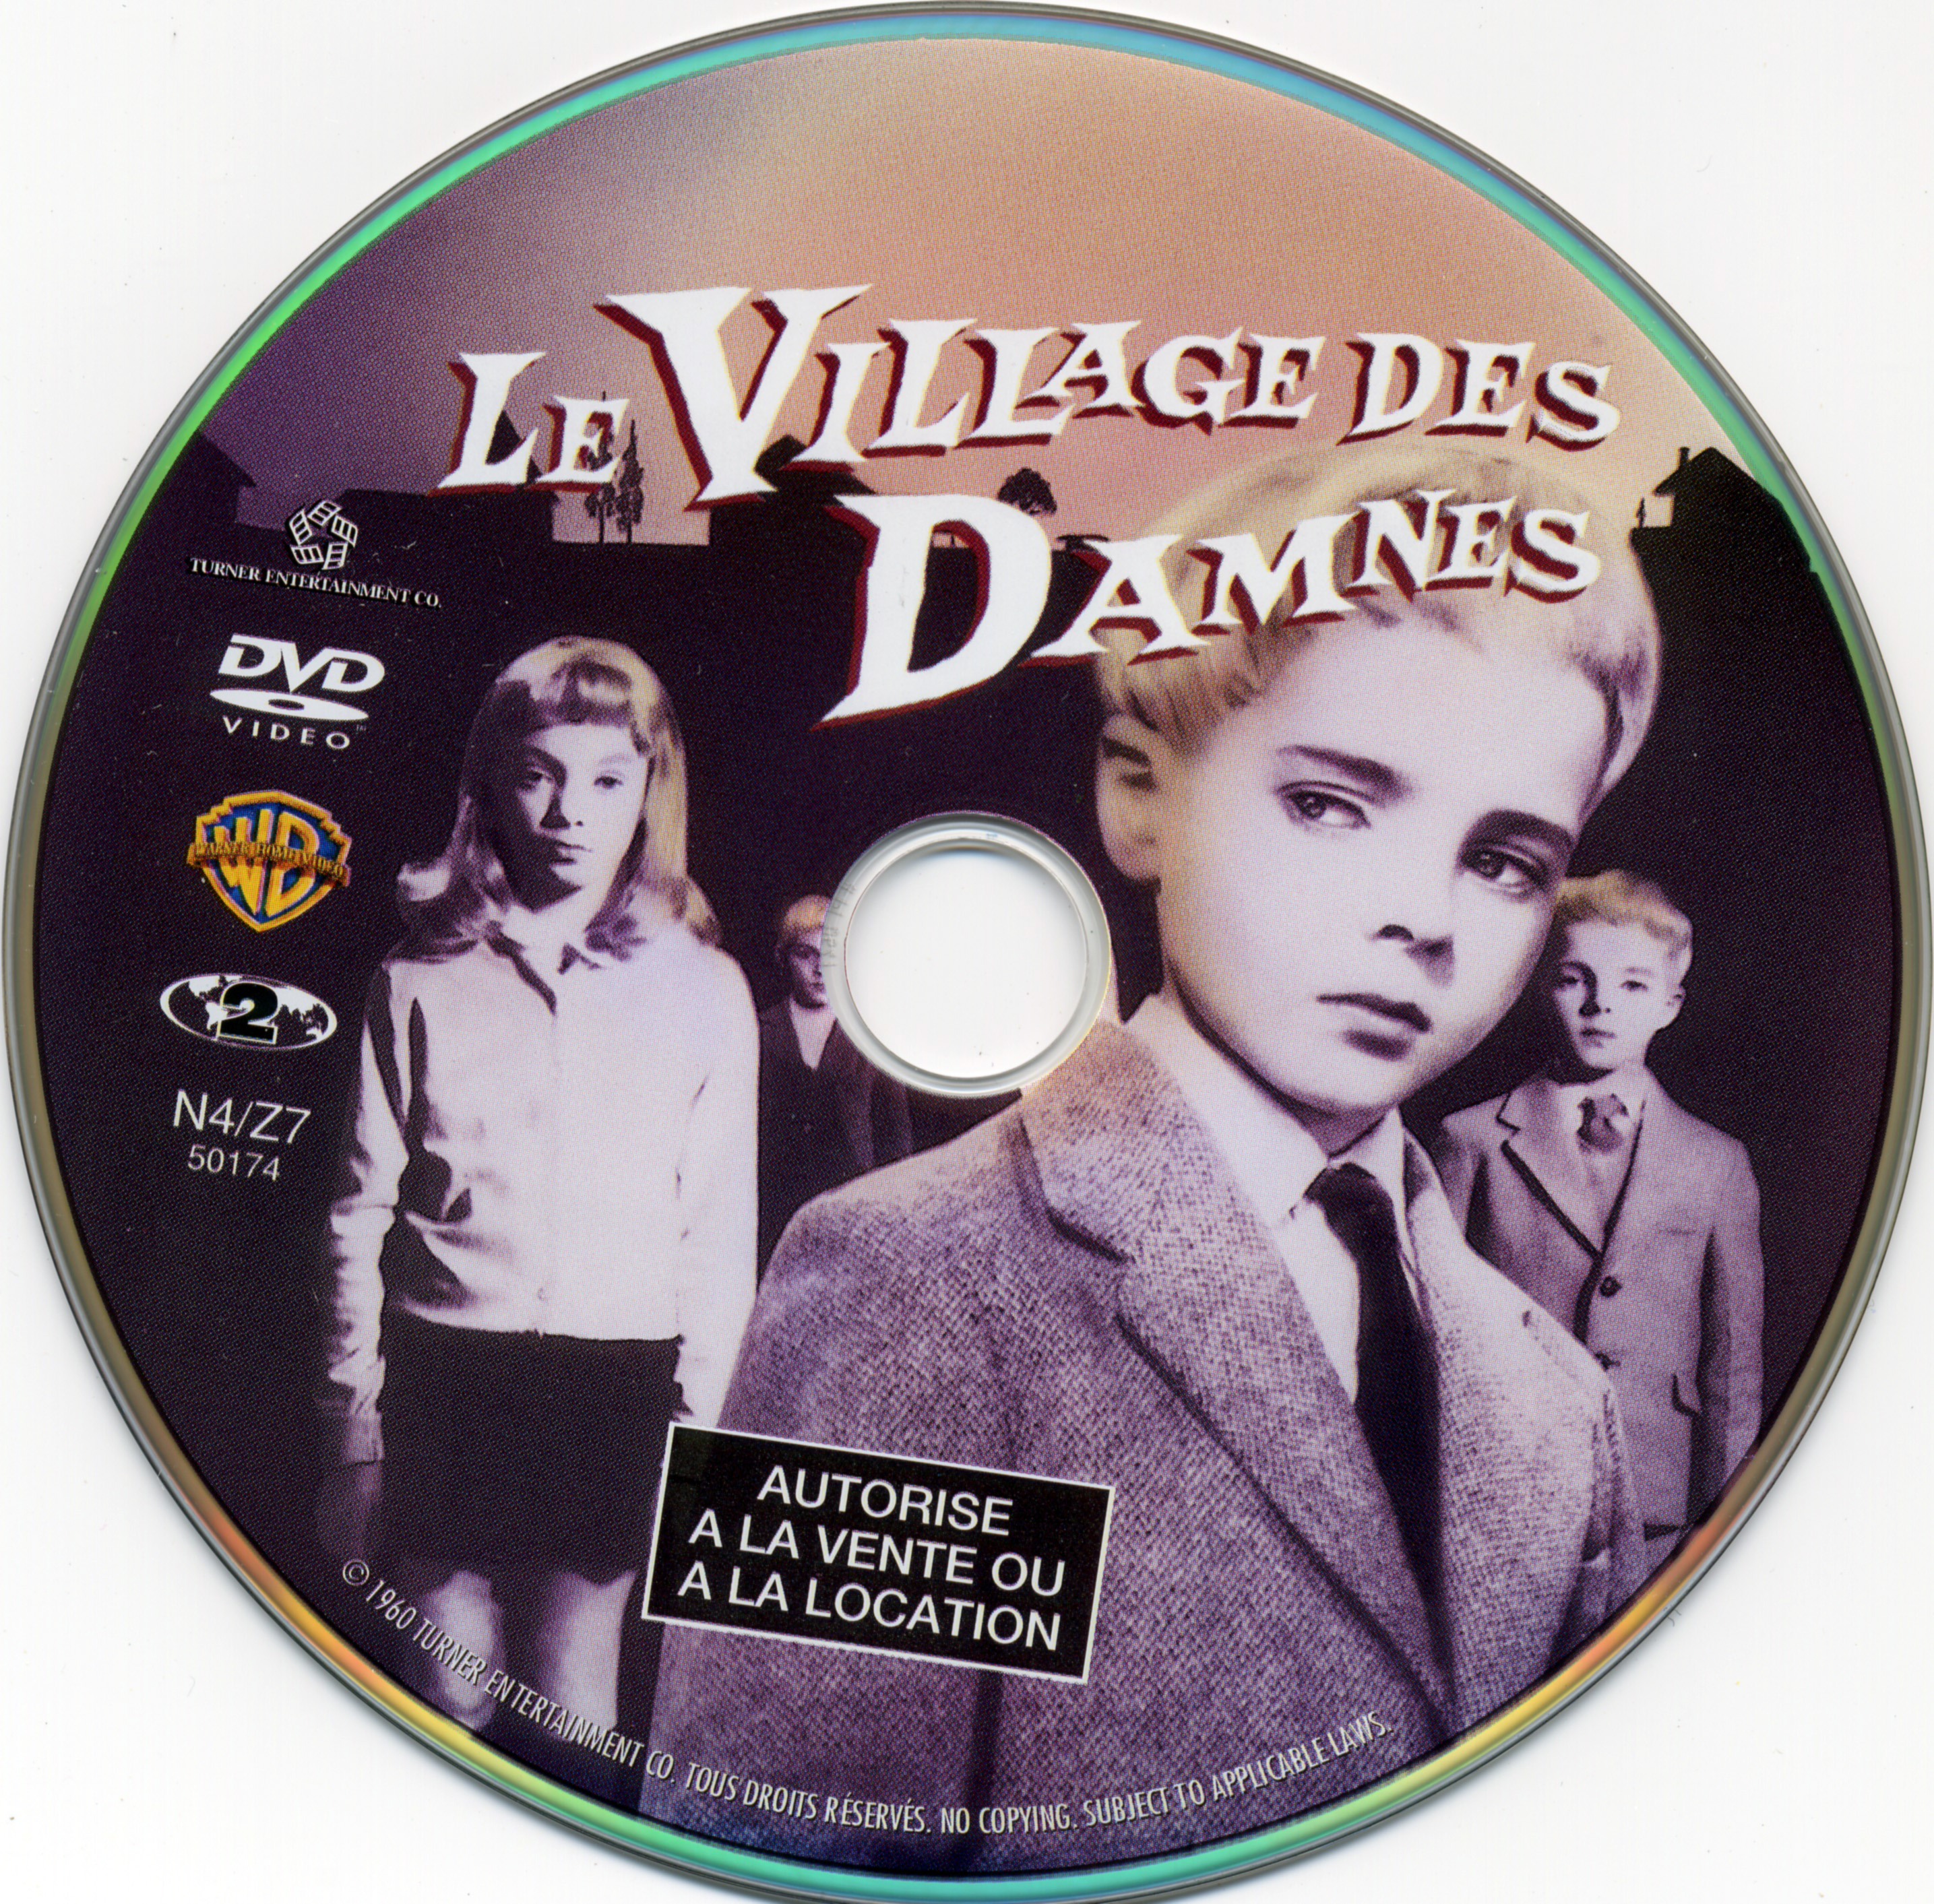 Le village des damns (1960) v2